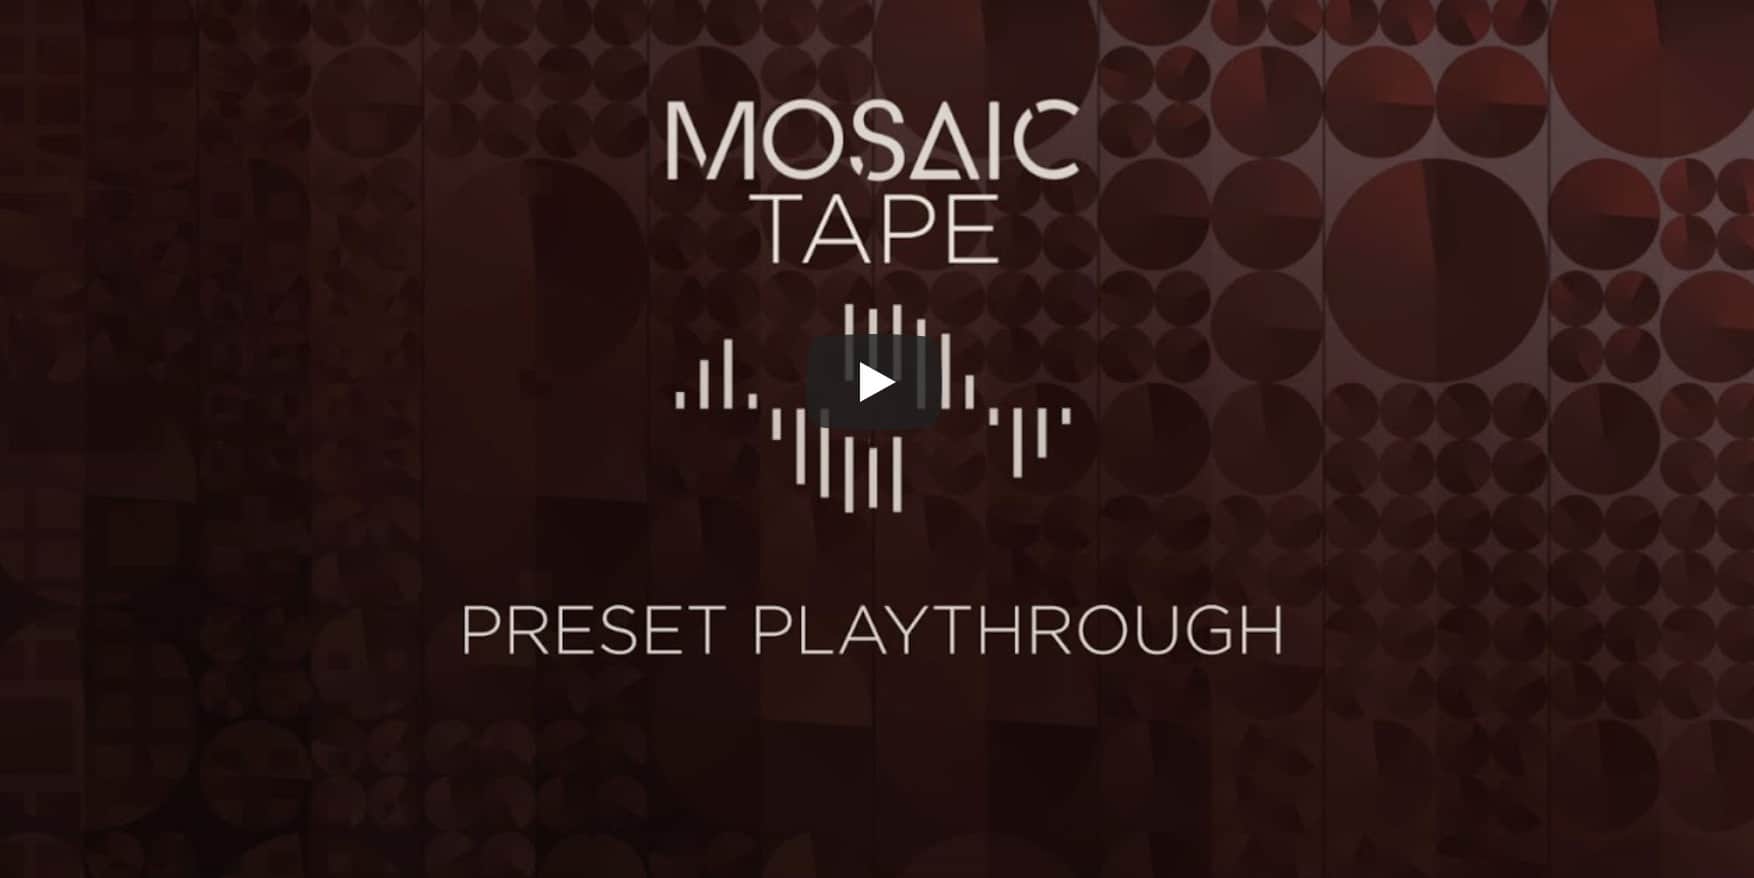 Mosaic-Tape-Preset-Playthrough-Heavyocity